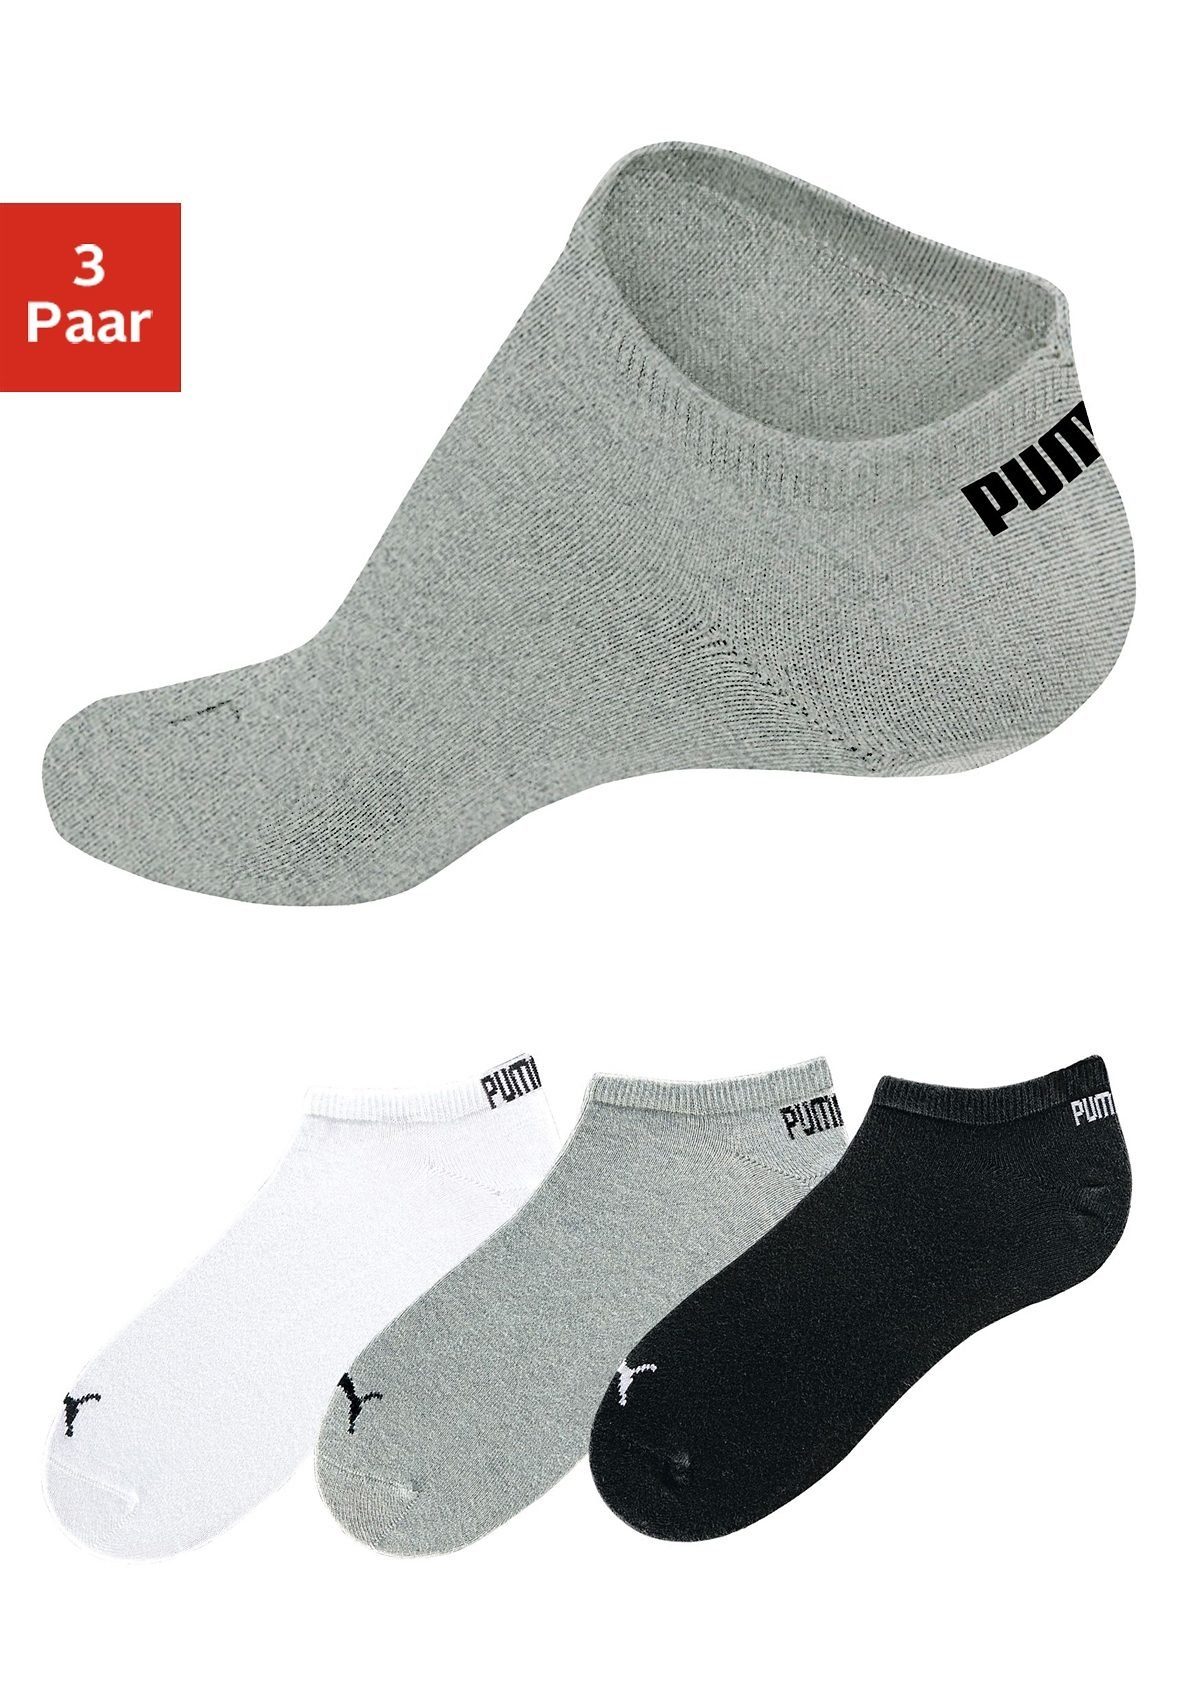 PUMA Sneakersocken (3-Paar) in klassischer Form 1x weiß, 1x grau-meliert, 1x schwarz